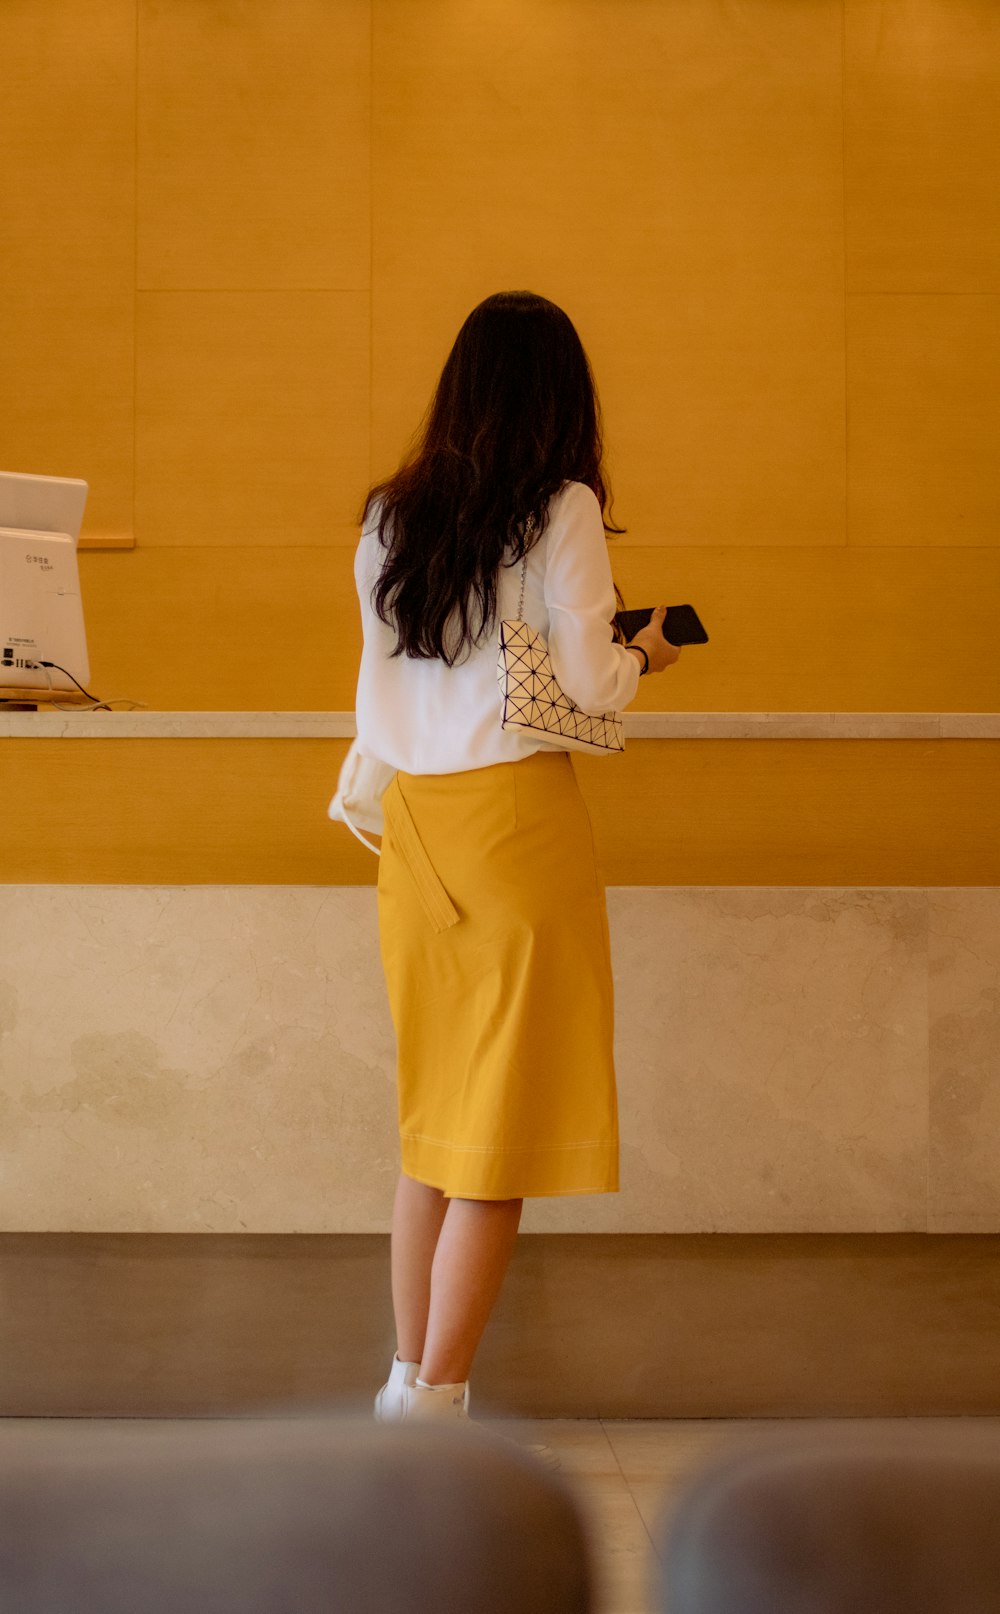 donna che indossa una camicia bianca a maniche lunghe e una gonna gialla